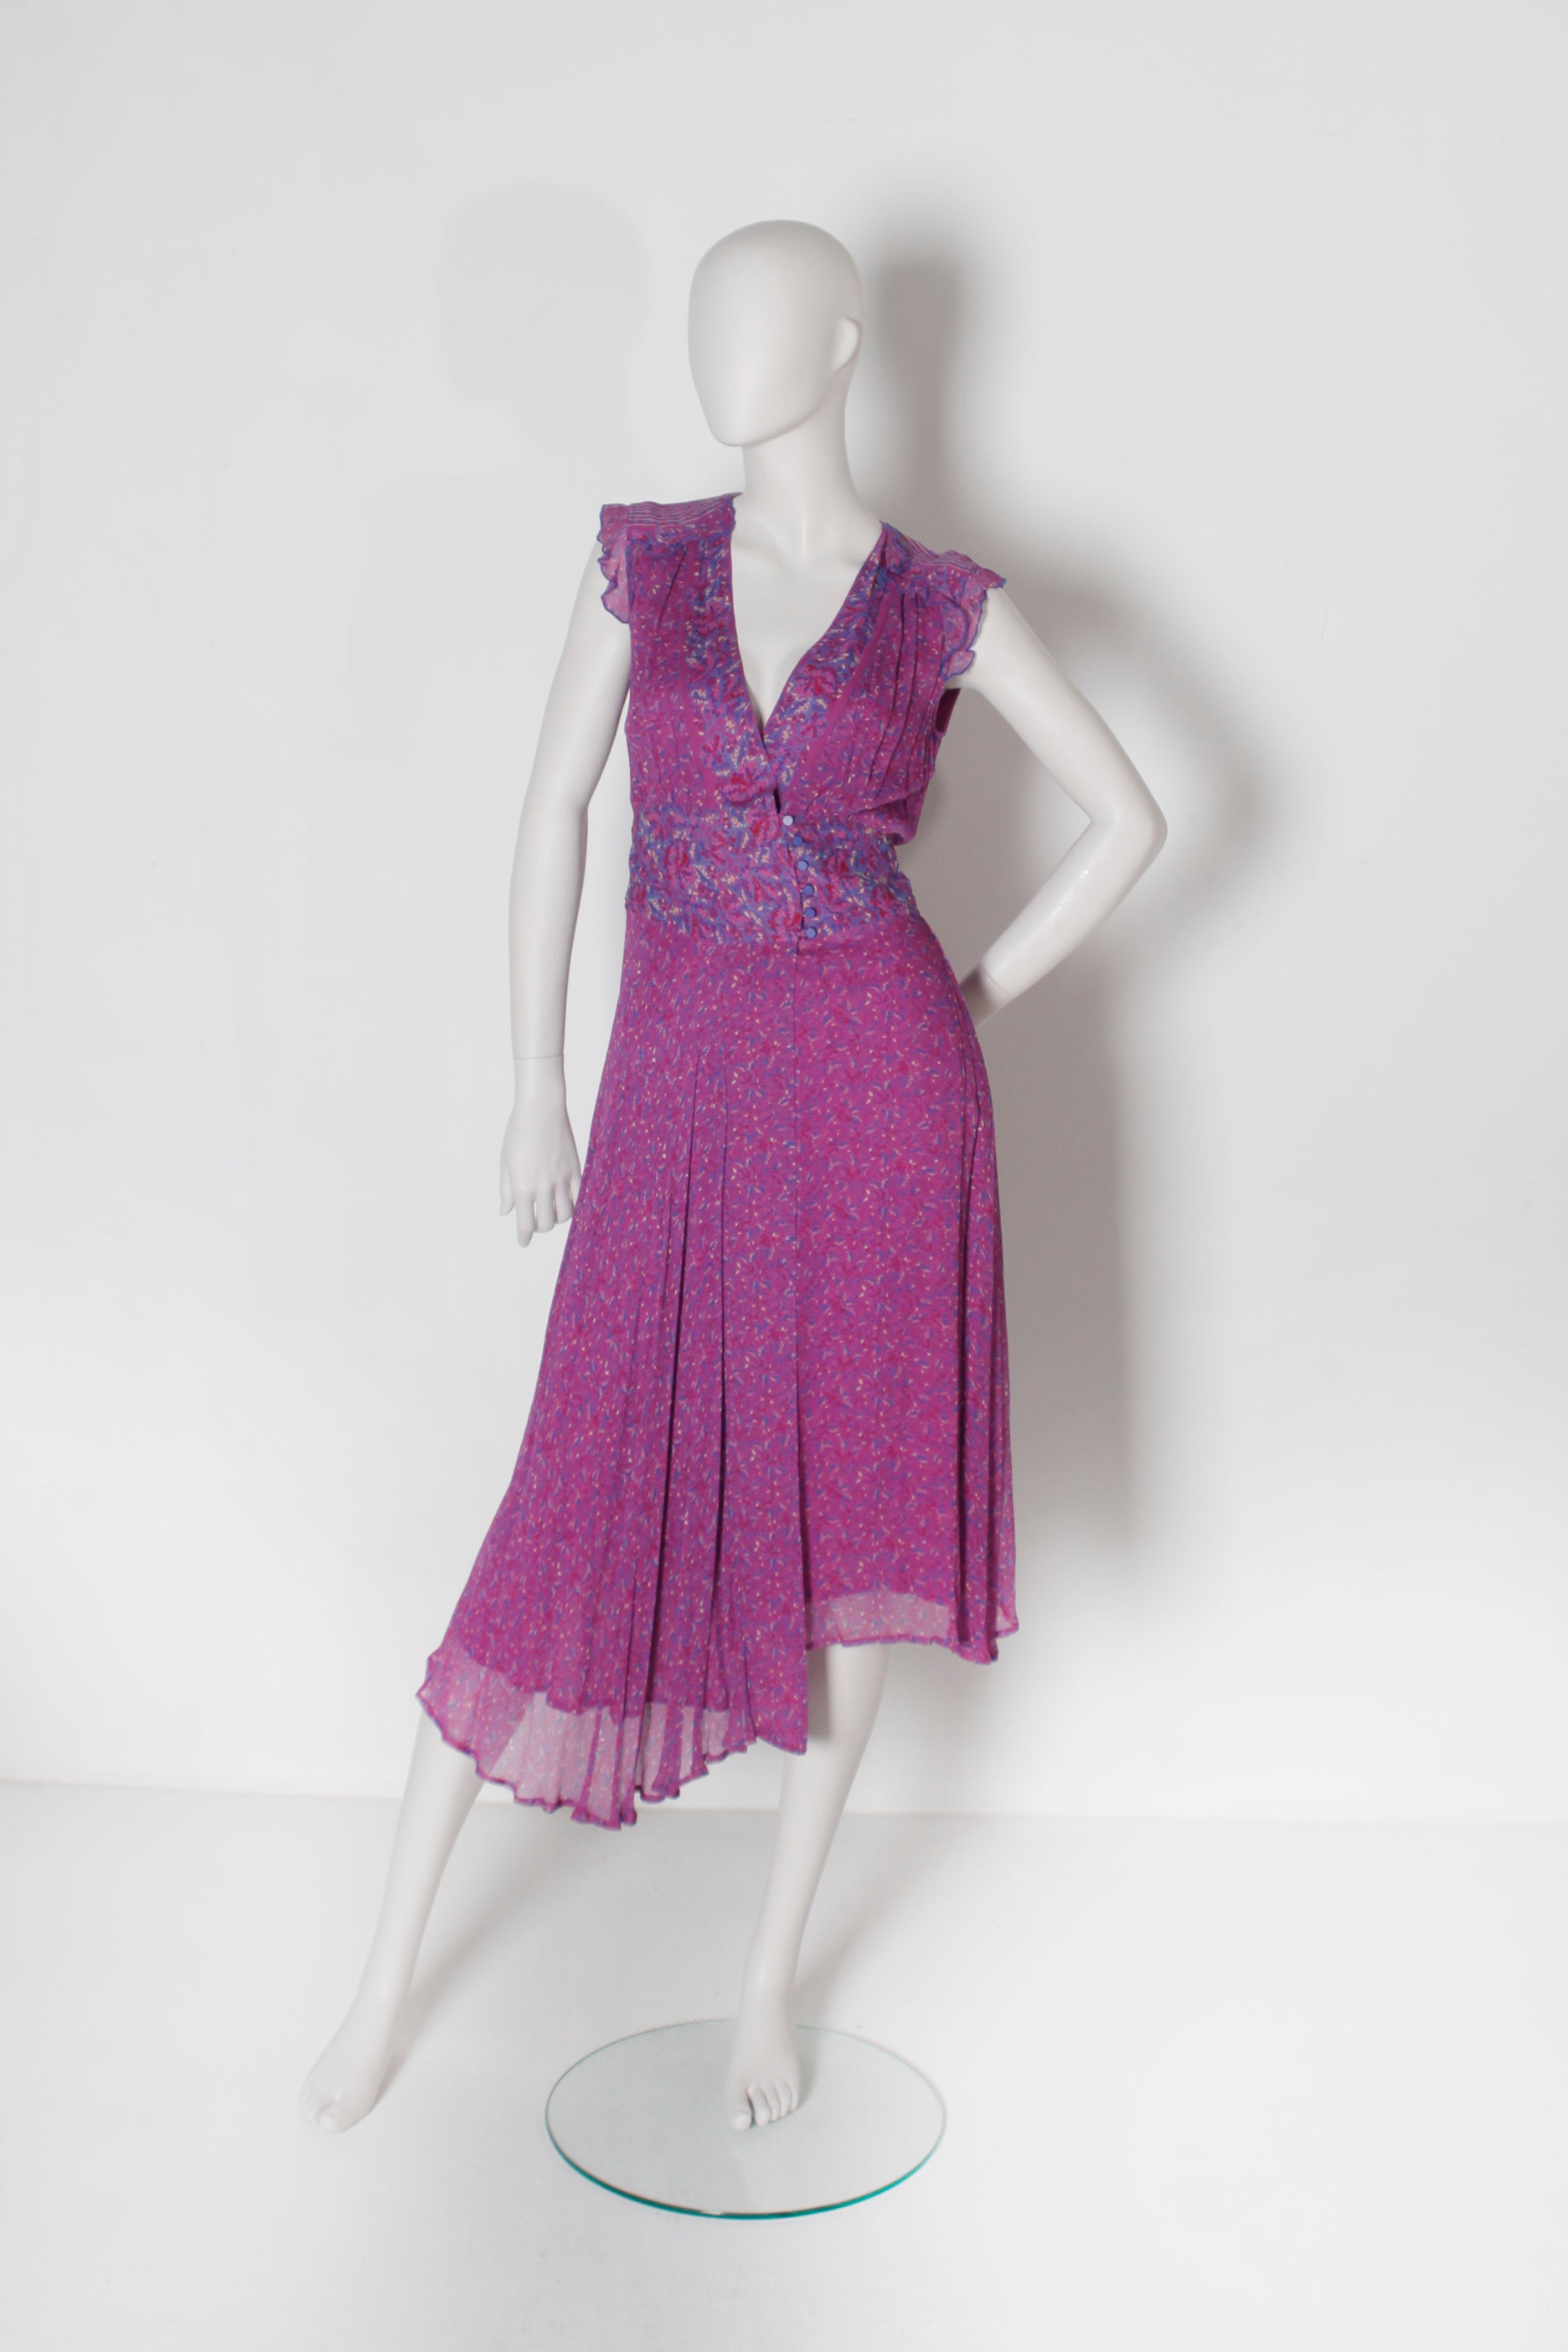 B&SH Purple Floral Sleeveless Dress (Small)